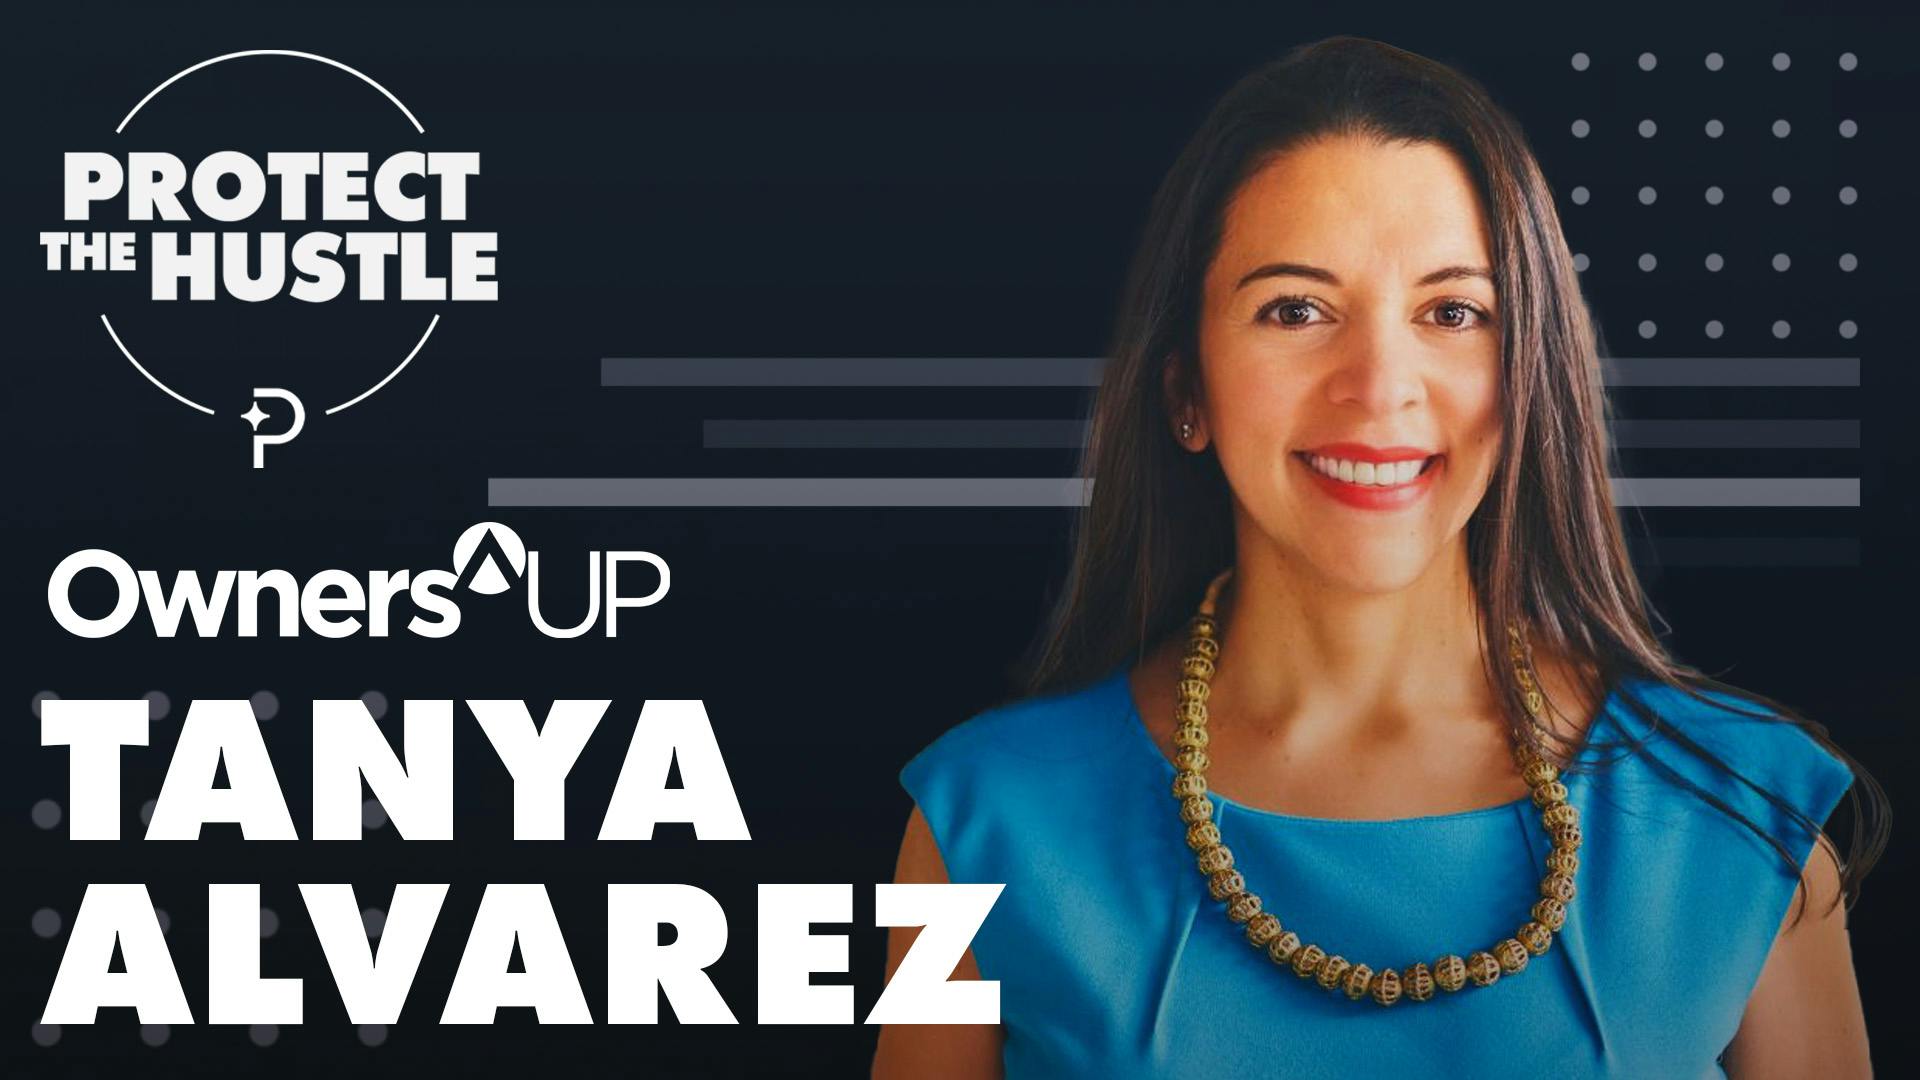 Protect the Hustle Thumbnail featuring tanya Alvarez of OwnersUP